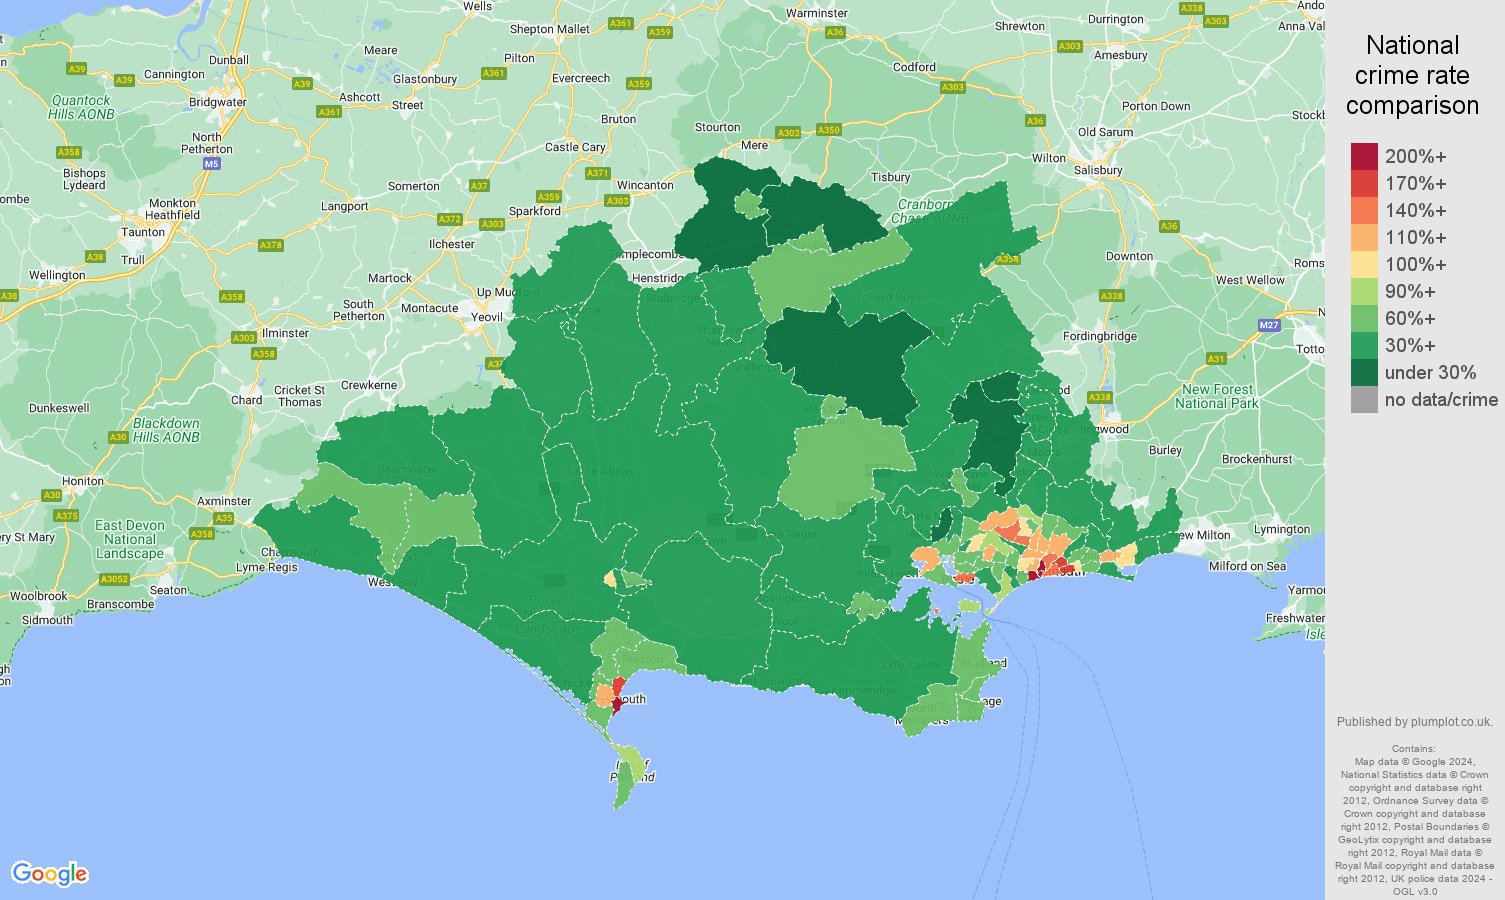 Dorset crime rate comparison map